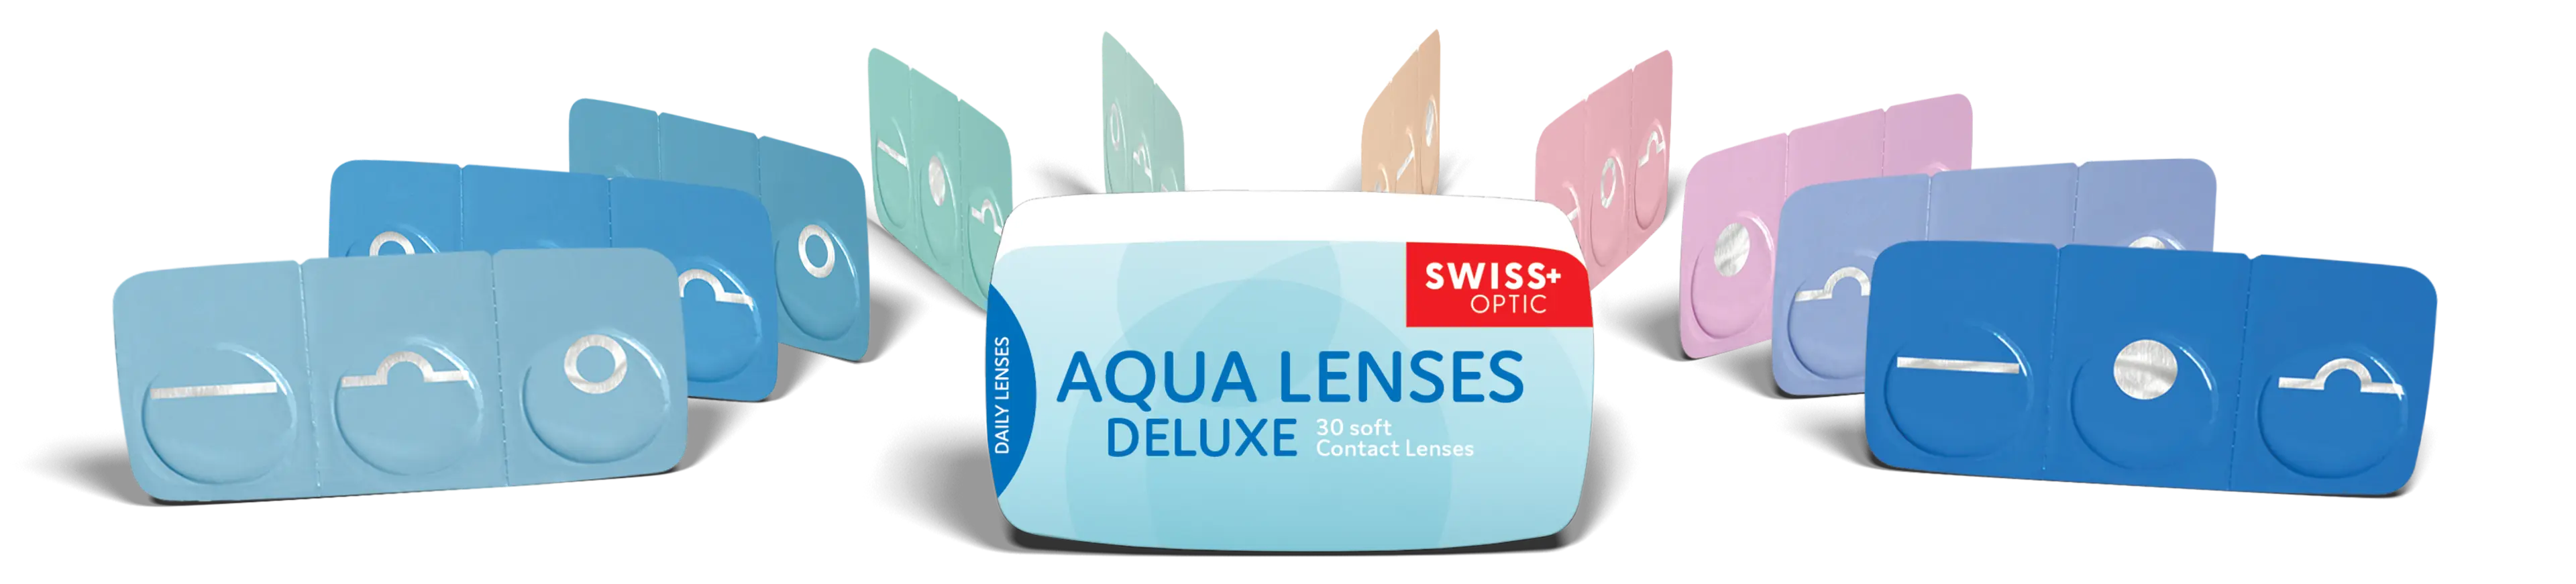 Swiss Optic Aqua Deluxe S 30 pack